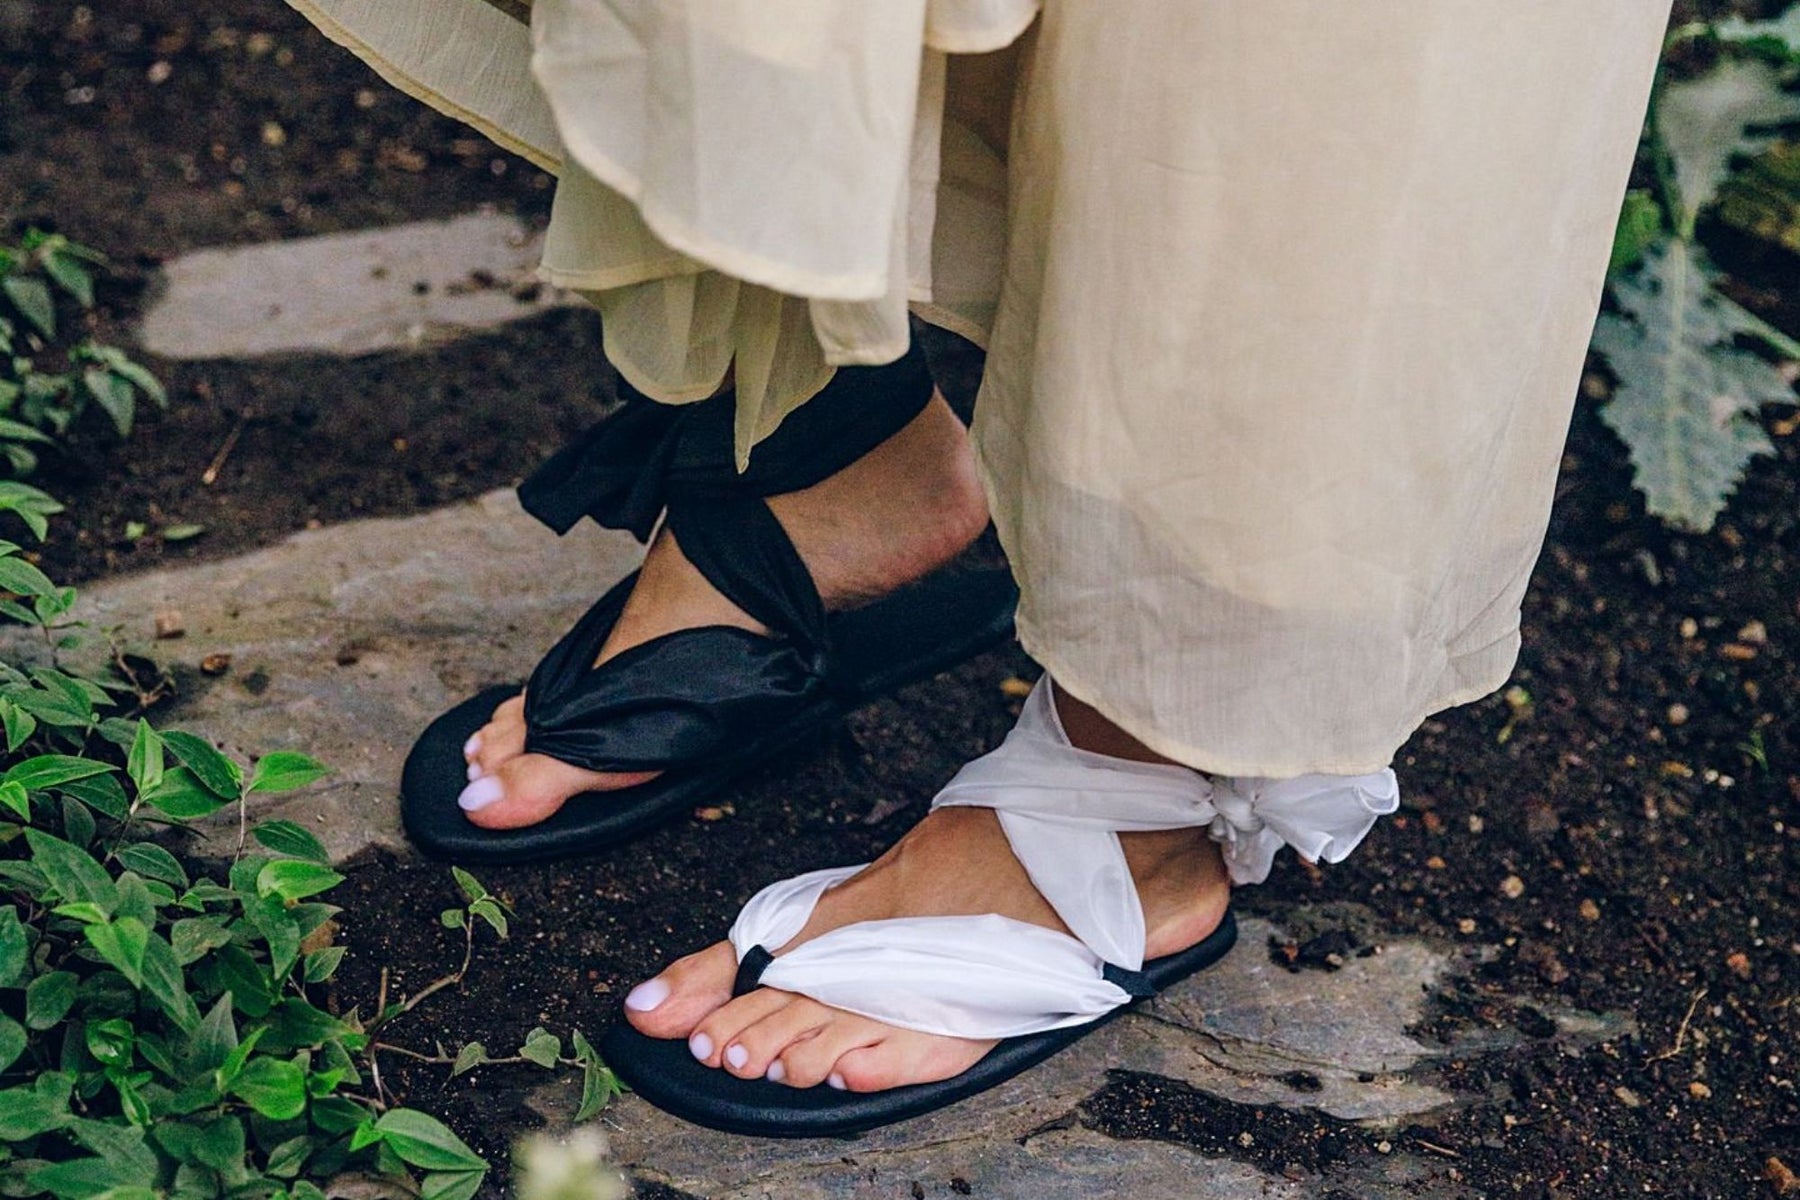 Reignbows Breast Cancer Awareness Barefoot Sandals